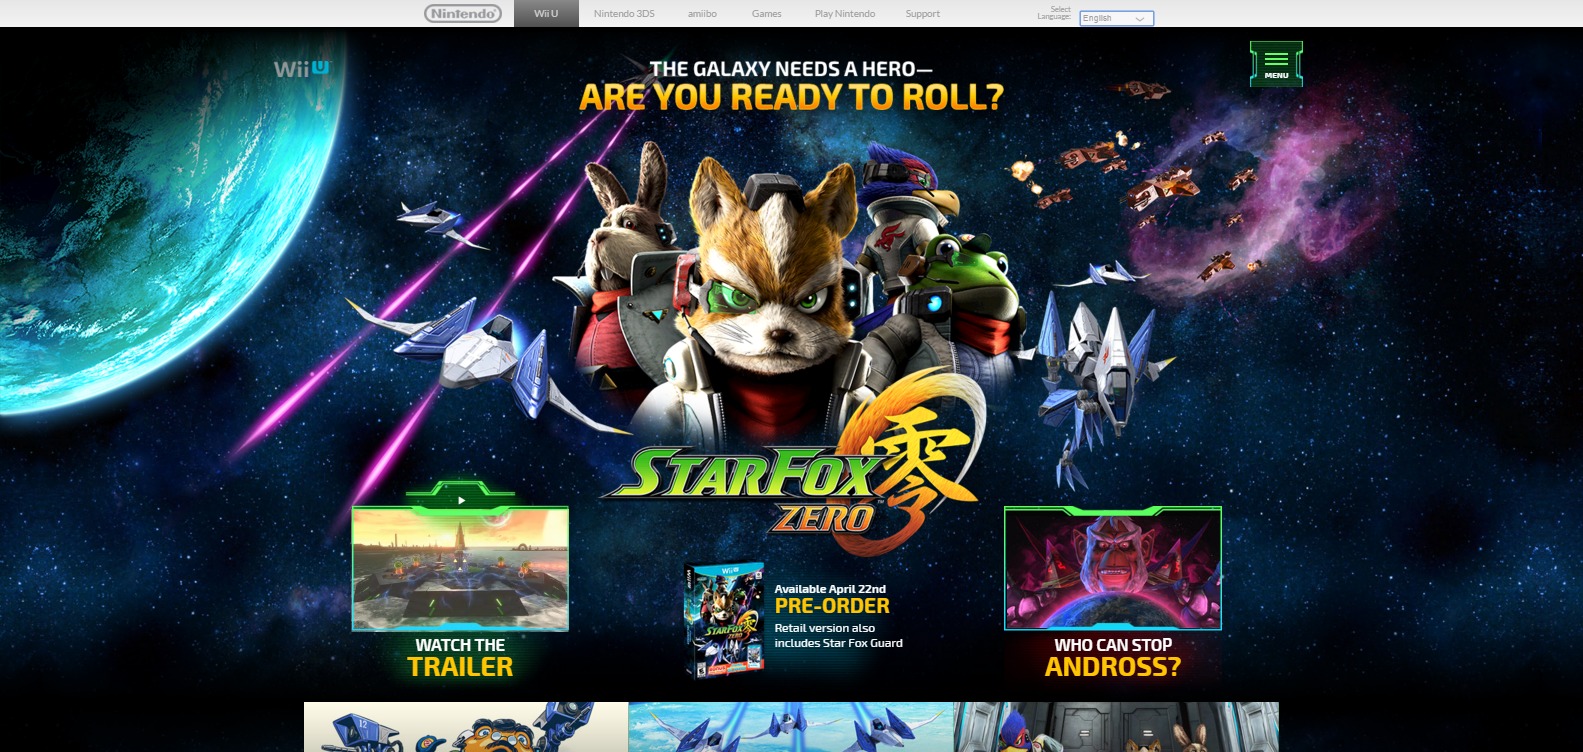 Star Fox Zero Wii U Release Date is April 22